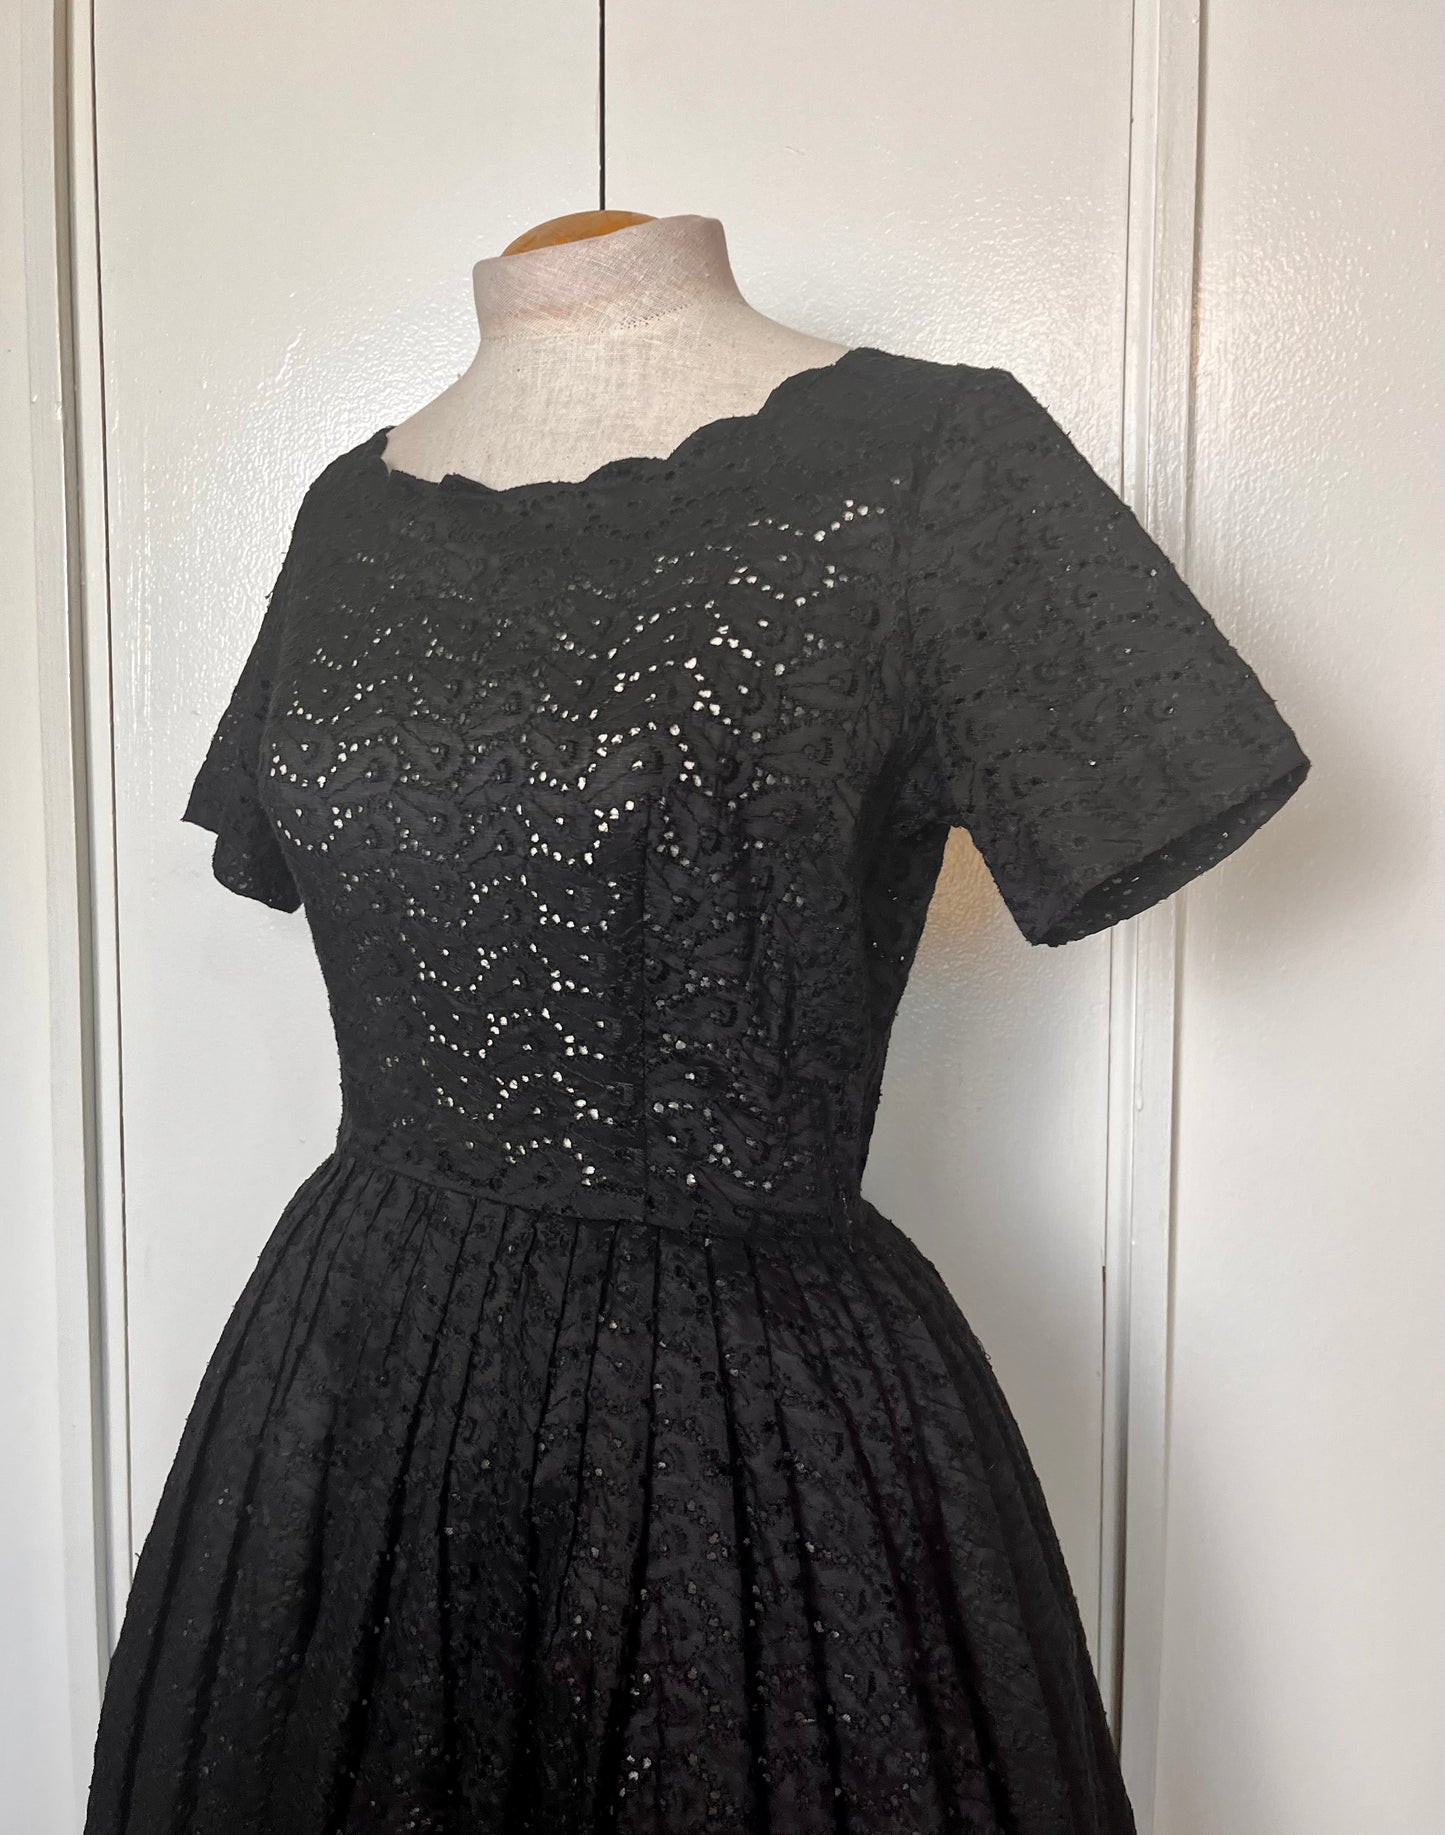 Vintage 1950's Black Cotton Eyelet Scalloped Fit n Flare Dress